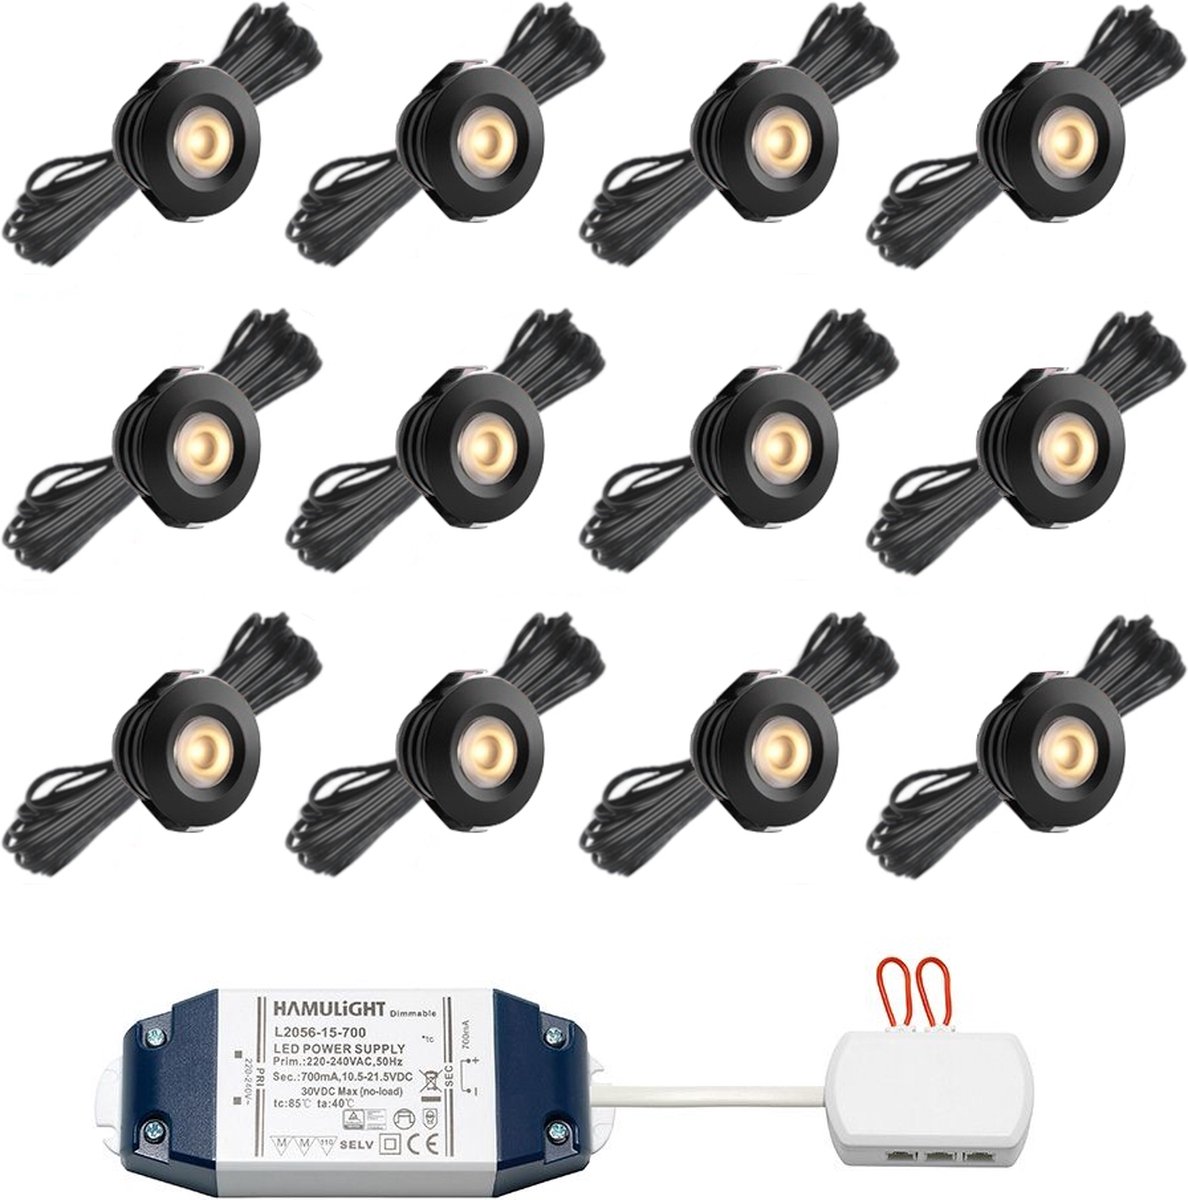 LED inbouwspot Pals bas zwart - inclusief trafo - inbouwspots / downlights / plafondspots / led spot / 3W / dimbaar / warm wit / rond / 230V / IP44 / - set van 12 stuks